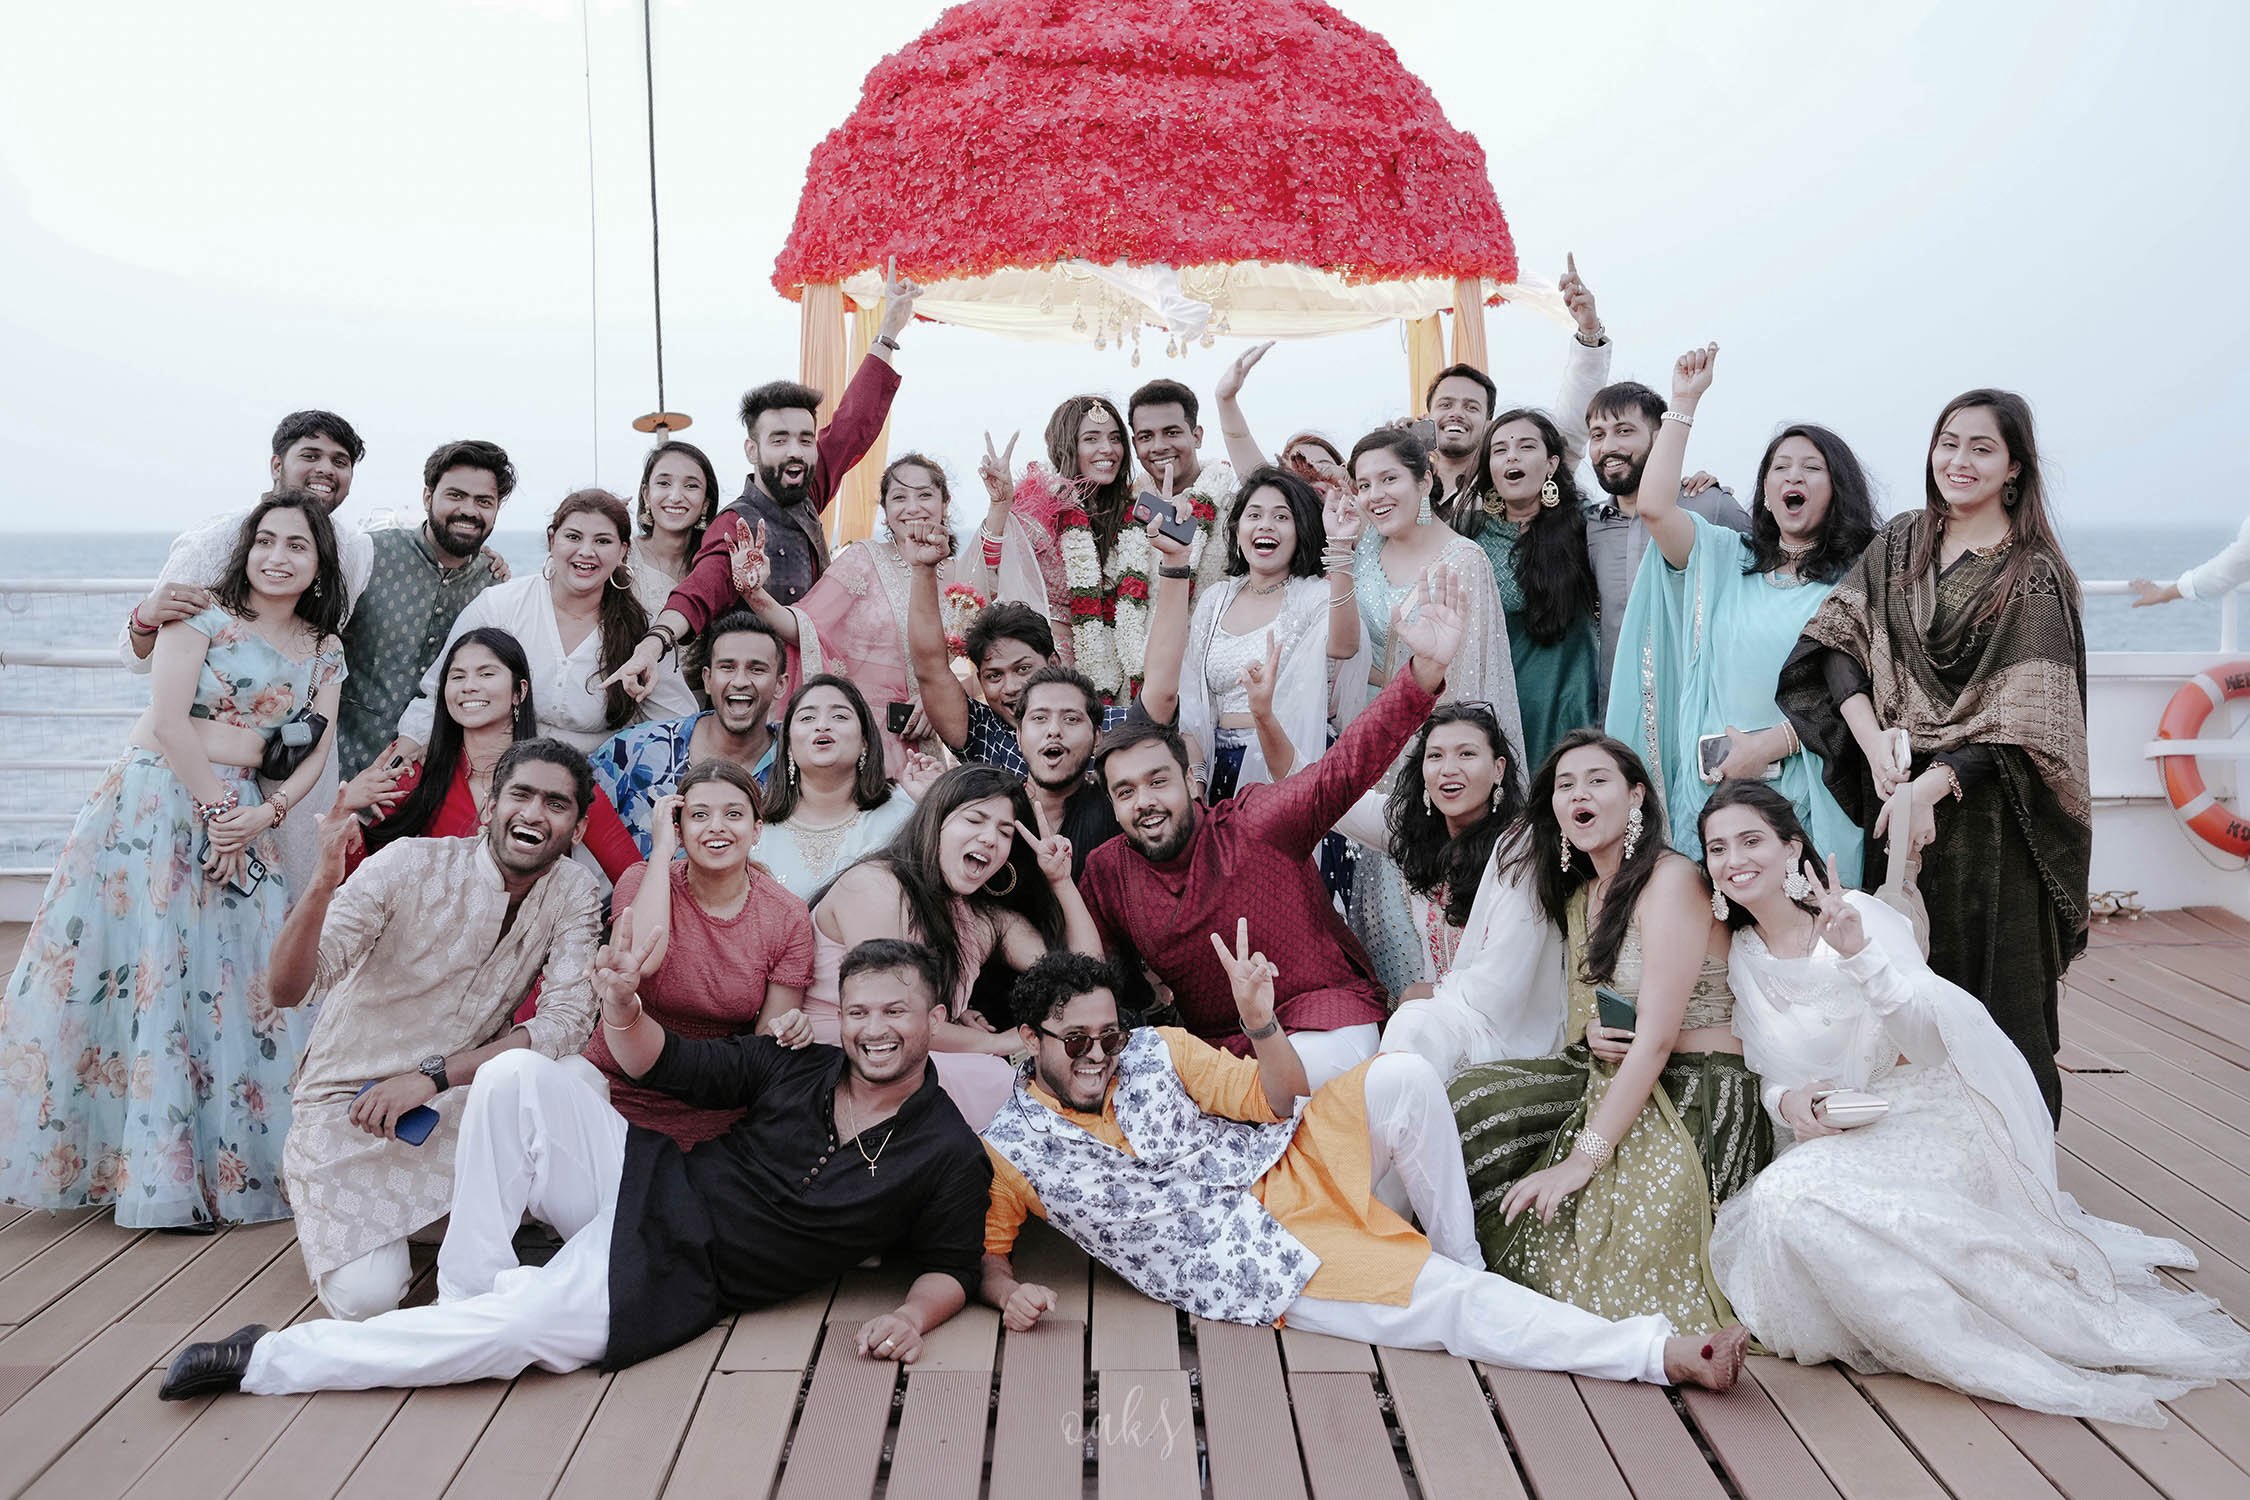 This Destination Wedding In Kerala Had A Blend Of Punjabi-Malayali Cultures!